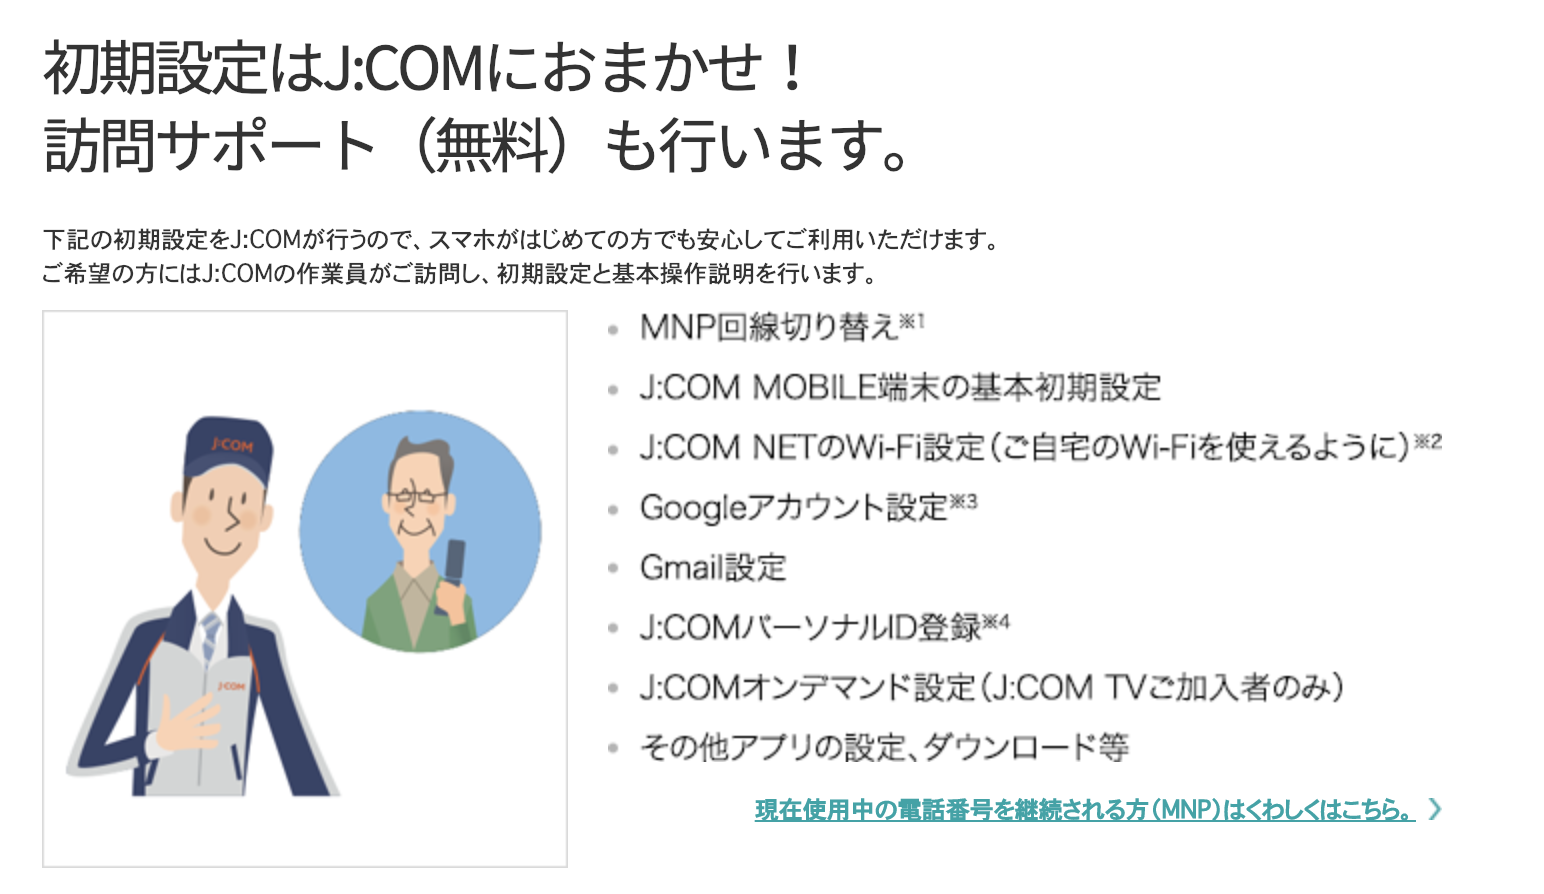 J:COM mobile　サポート